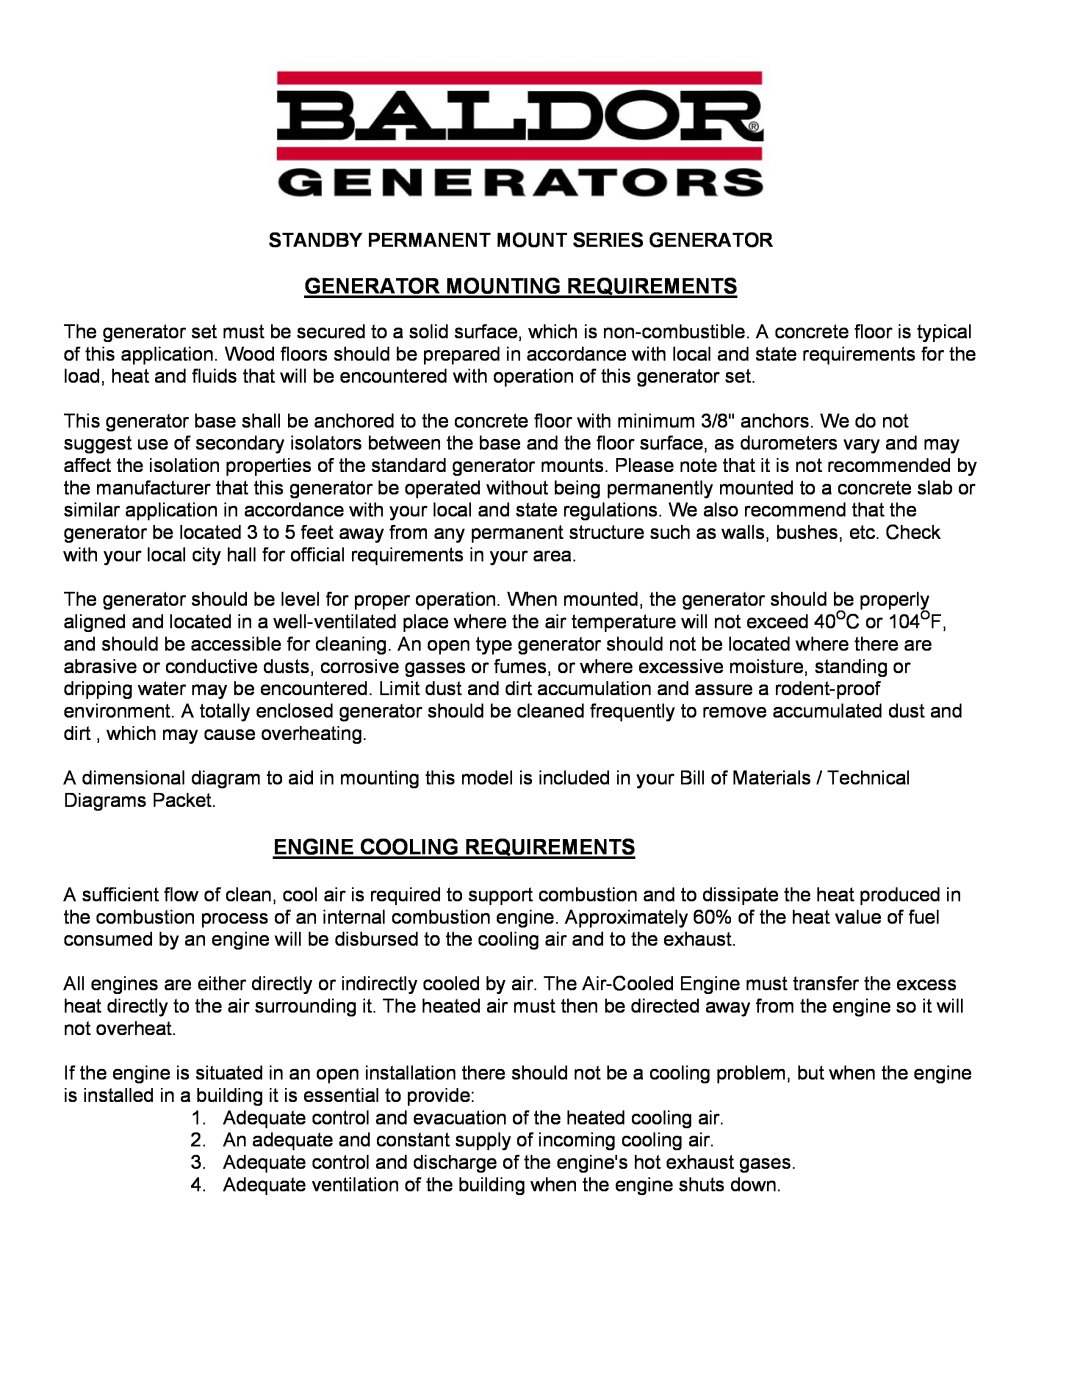 Baldor ISO9001 Generator Mounting Requirements, Engine Cooling Requirements, Standby Permanent Mount Series Generator 